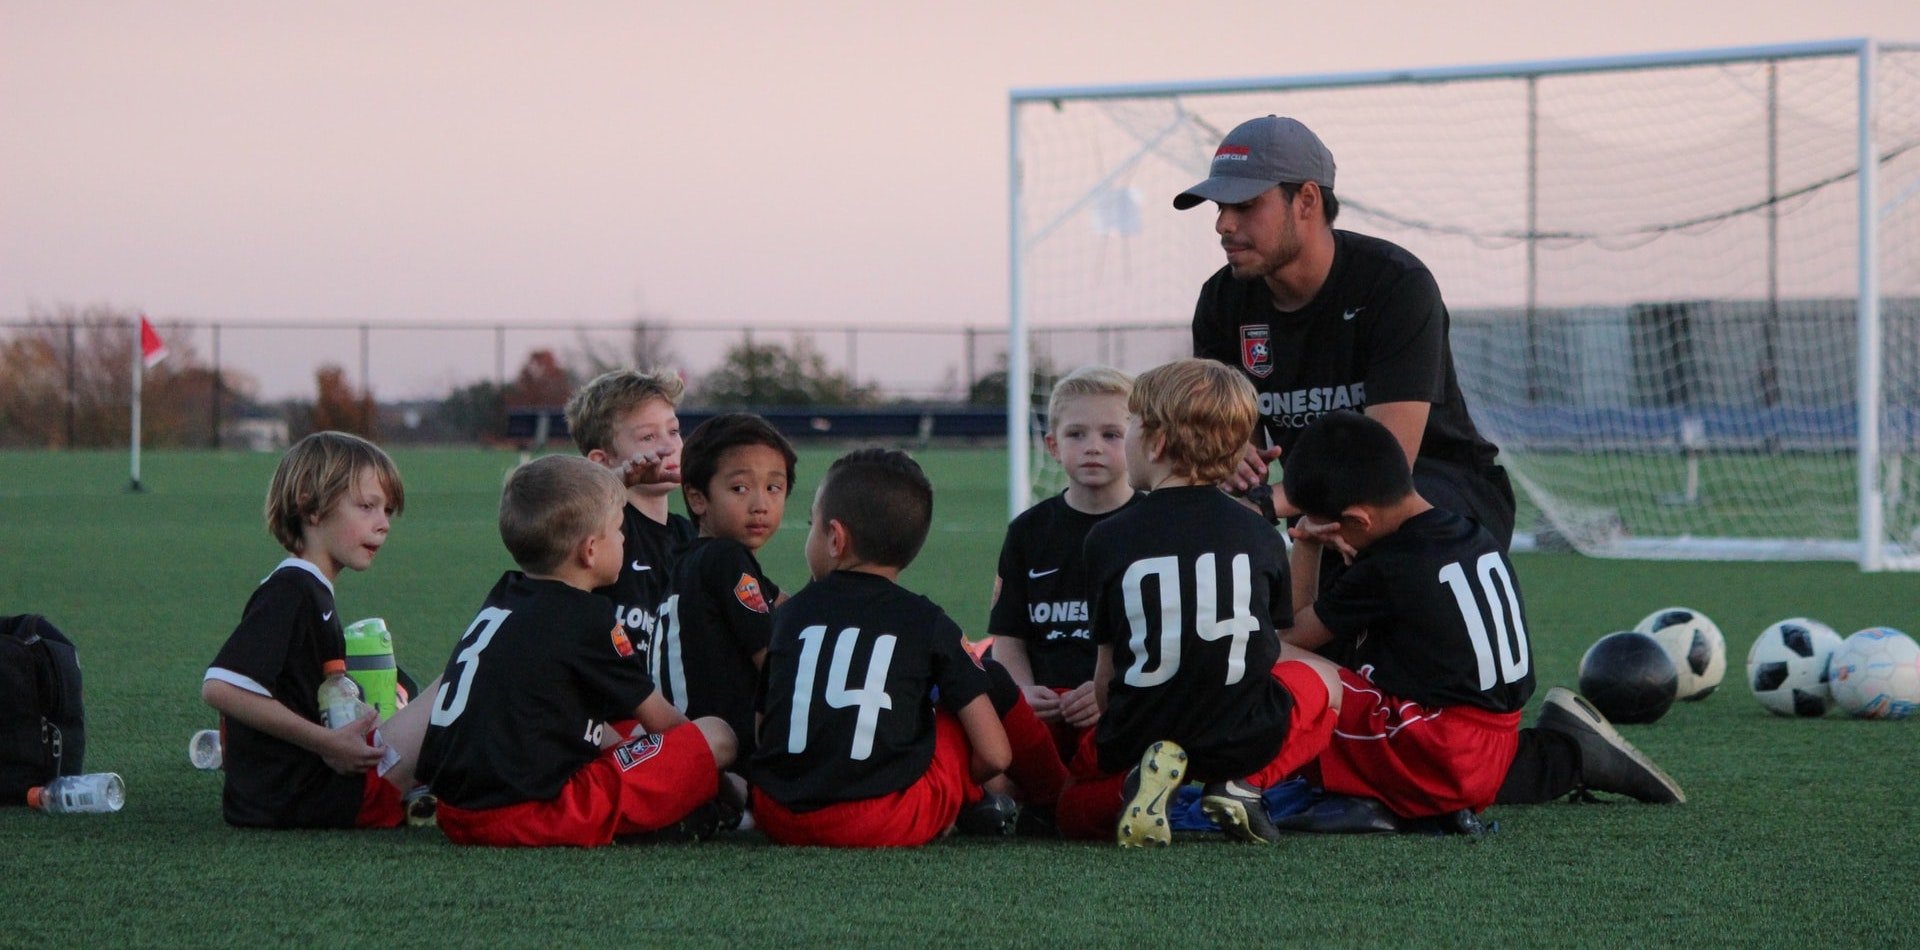 آموزش مربیگری فوتبال - چگونه مربی فوتبال شویم ؟